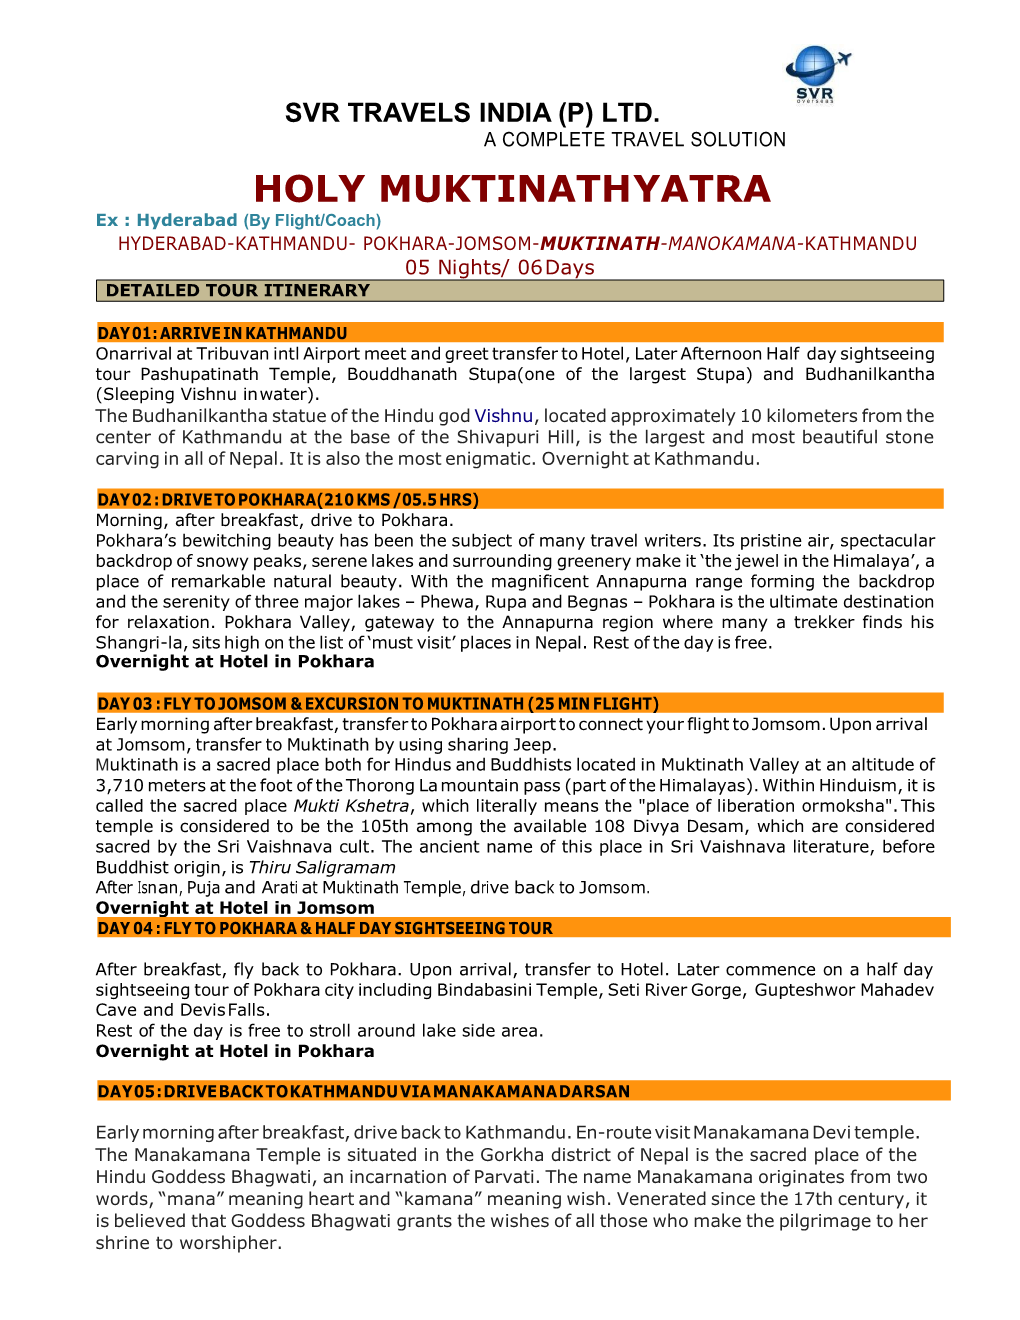 HOLY MUKTINATH YATRA Ex : Hyderabad (By Flight/Coach) HYDERABAD-KATHMANDU- POKHARA-JOMSOM-MUKTINATH-MANOKAMANA-KATHMANDU 05 Nights/ 06 Days DETAILED TOUR ITINERARY